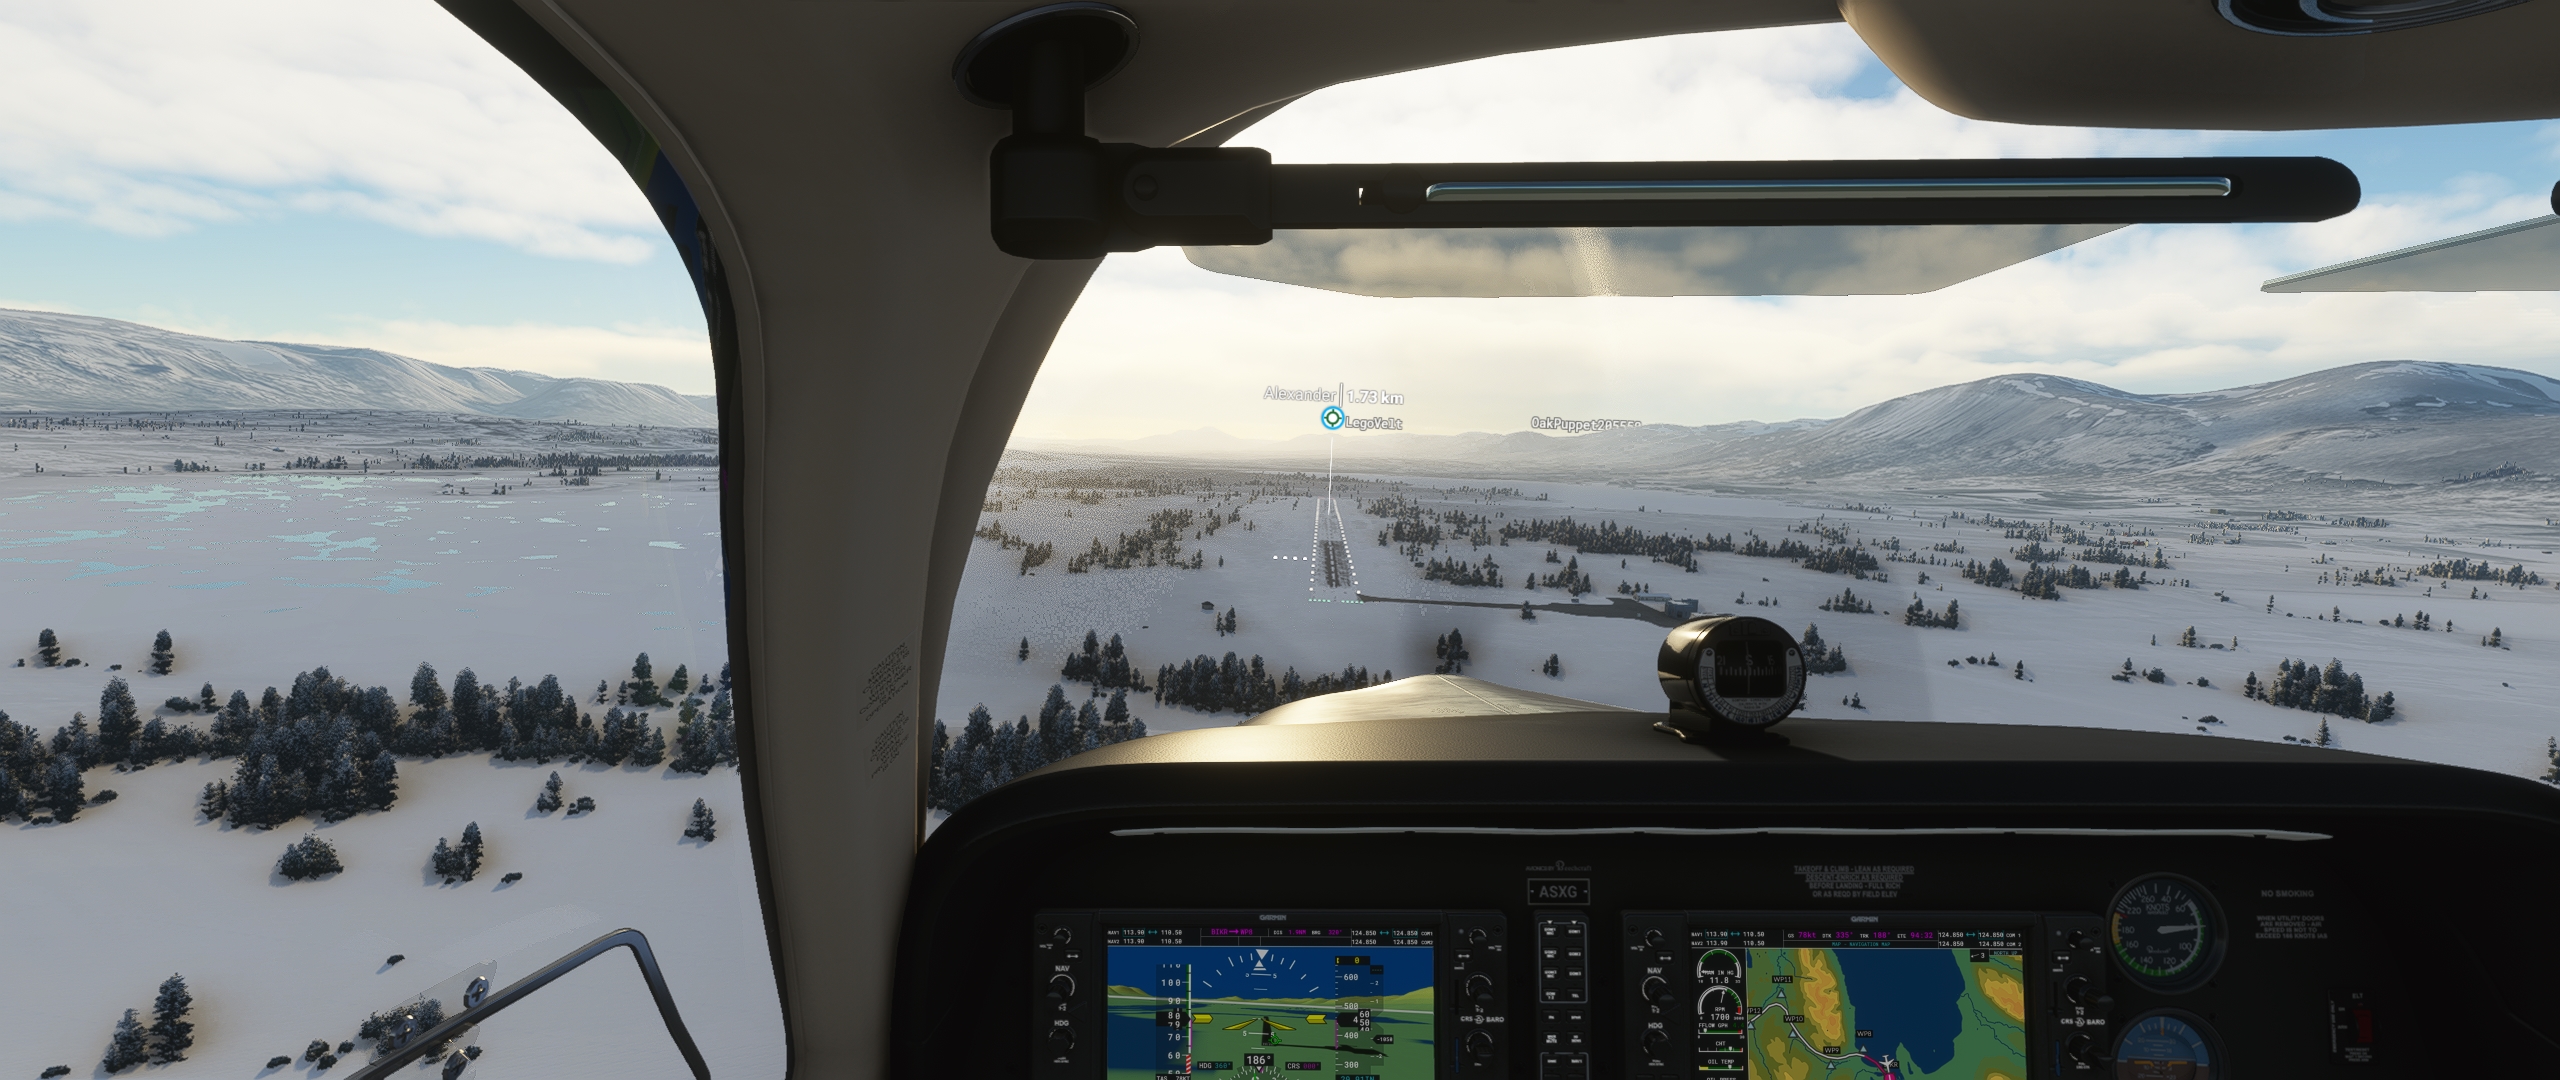 2021-02-13 17_34_35-Microsoft Flight Simulator - 1.12.13.0.jpg